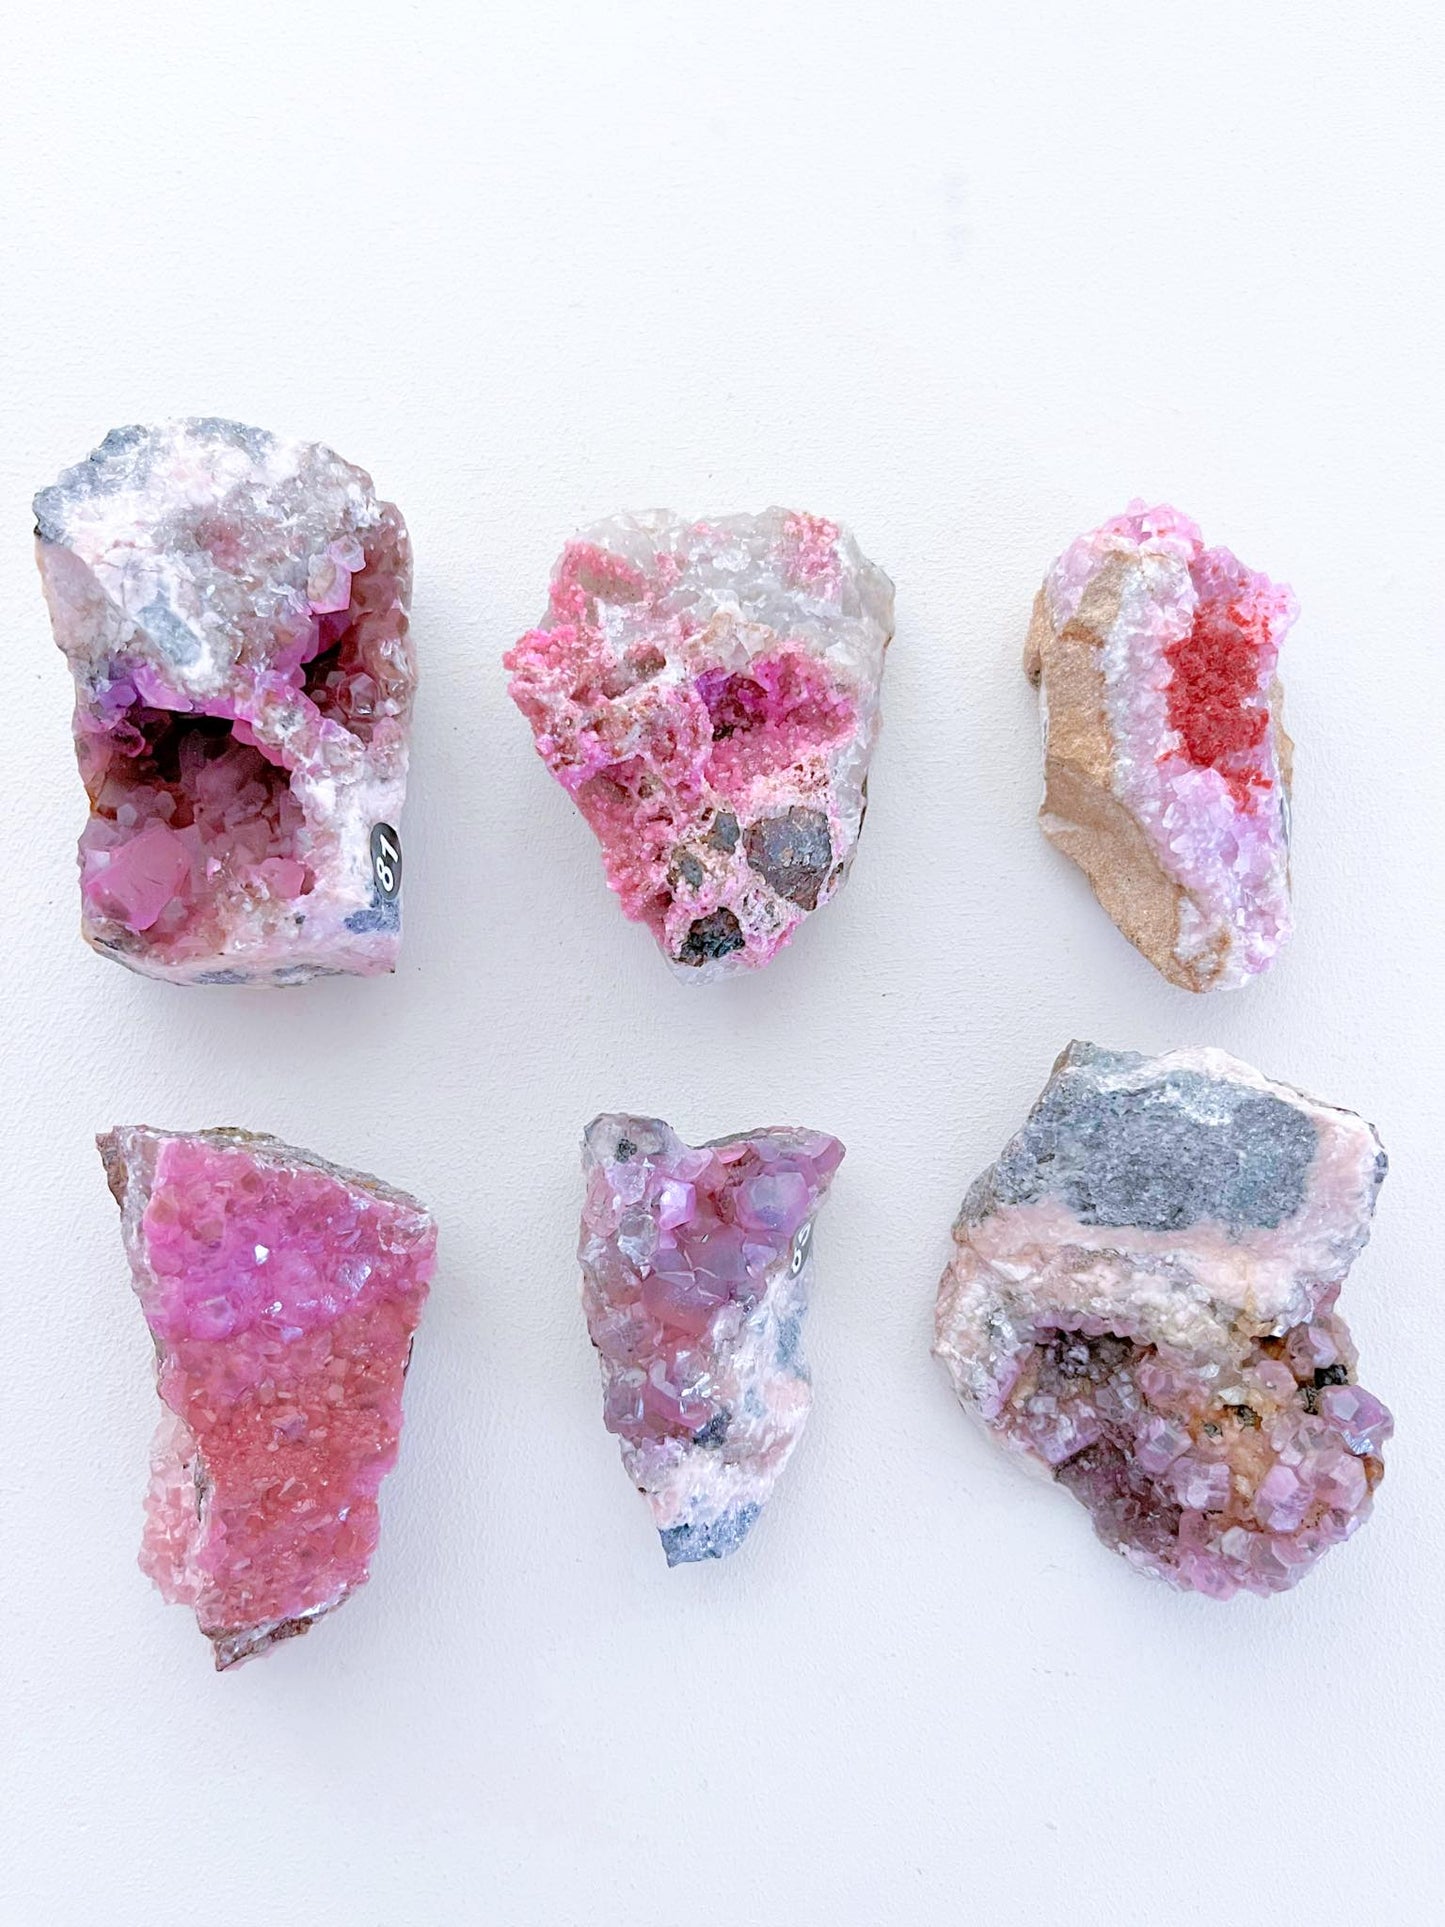 Hot and Jucy Pink Cobalto Calcite Specimen [83]- aus Marokko High Quality